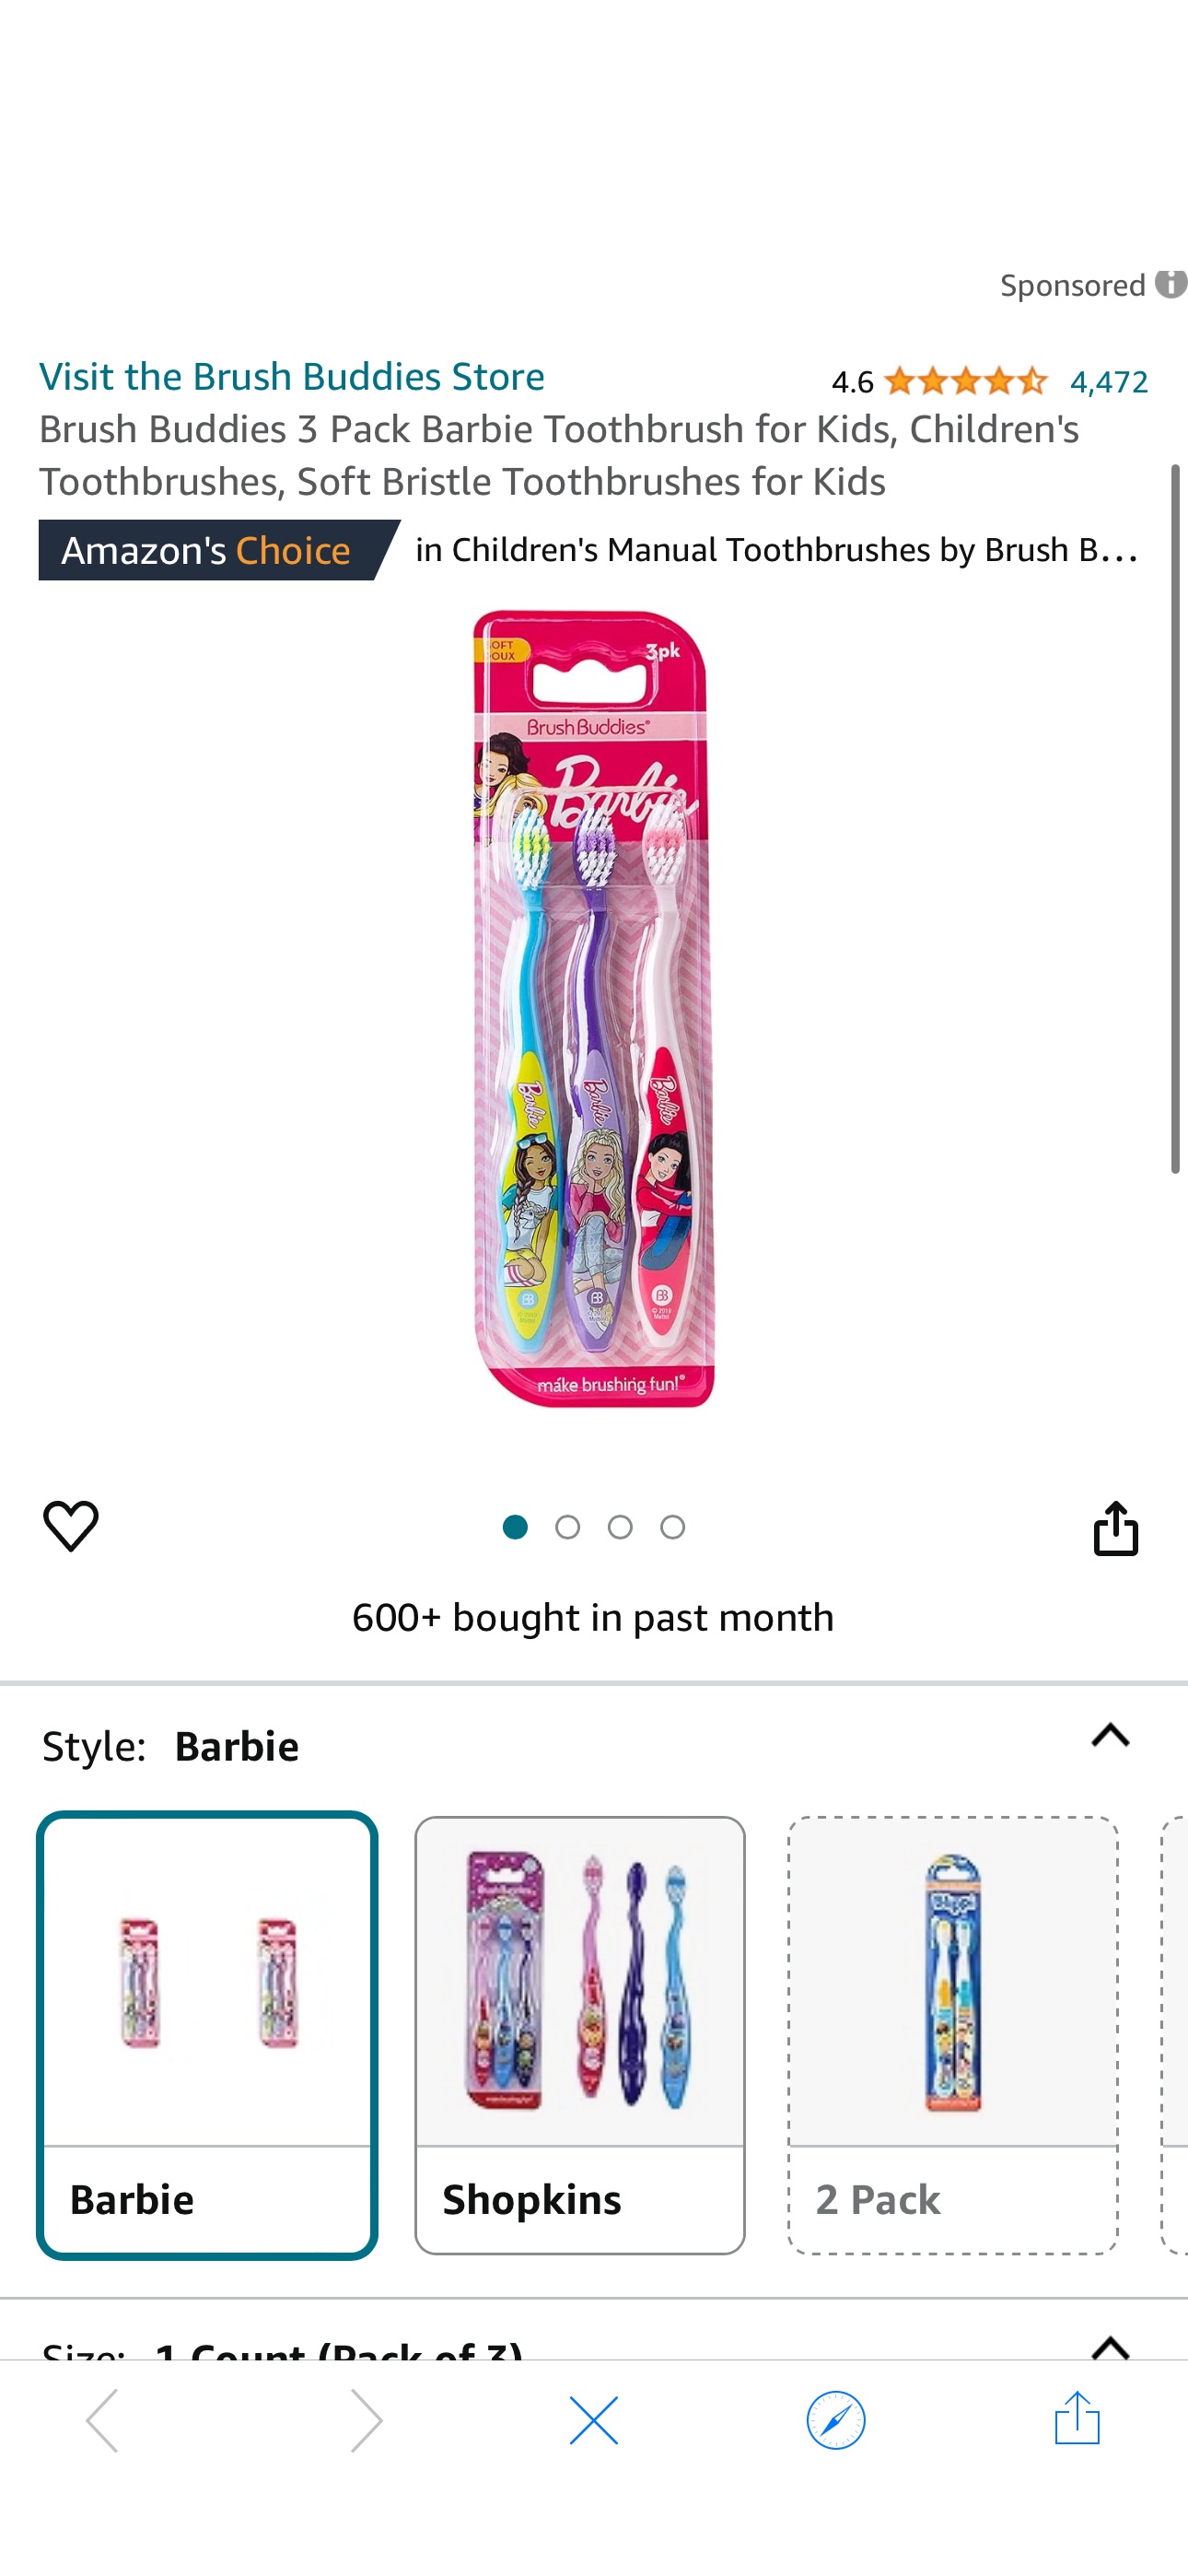 Amazon.com: Brush Buddies 3 Pack Barbie Toothbrush for Kids, Children's Toothbrushes, Soft Bristle Toothbrushes for Kids : Health & Household